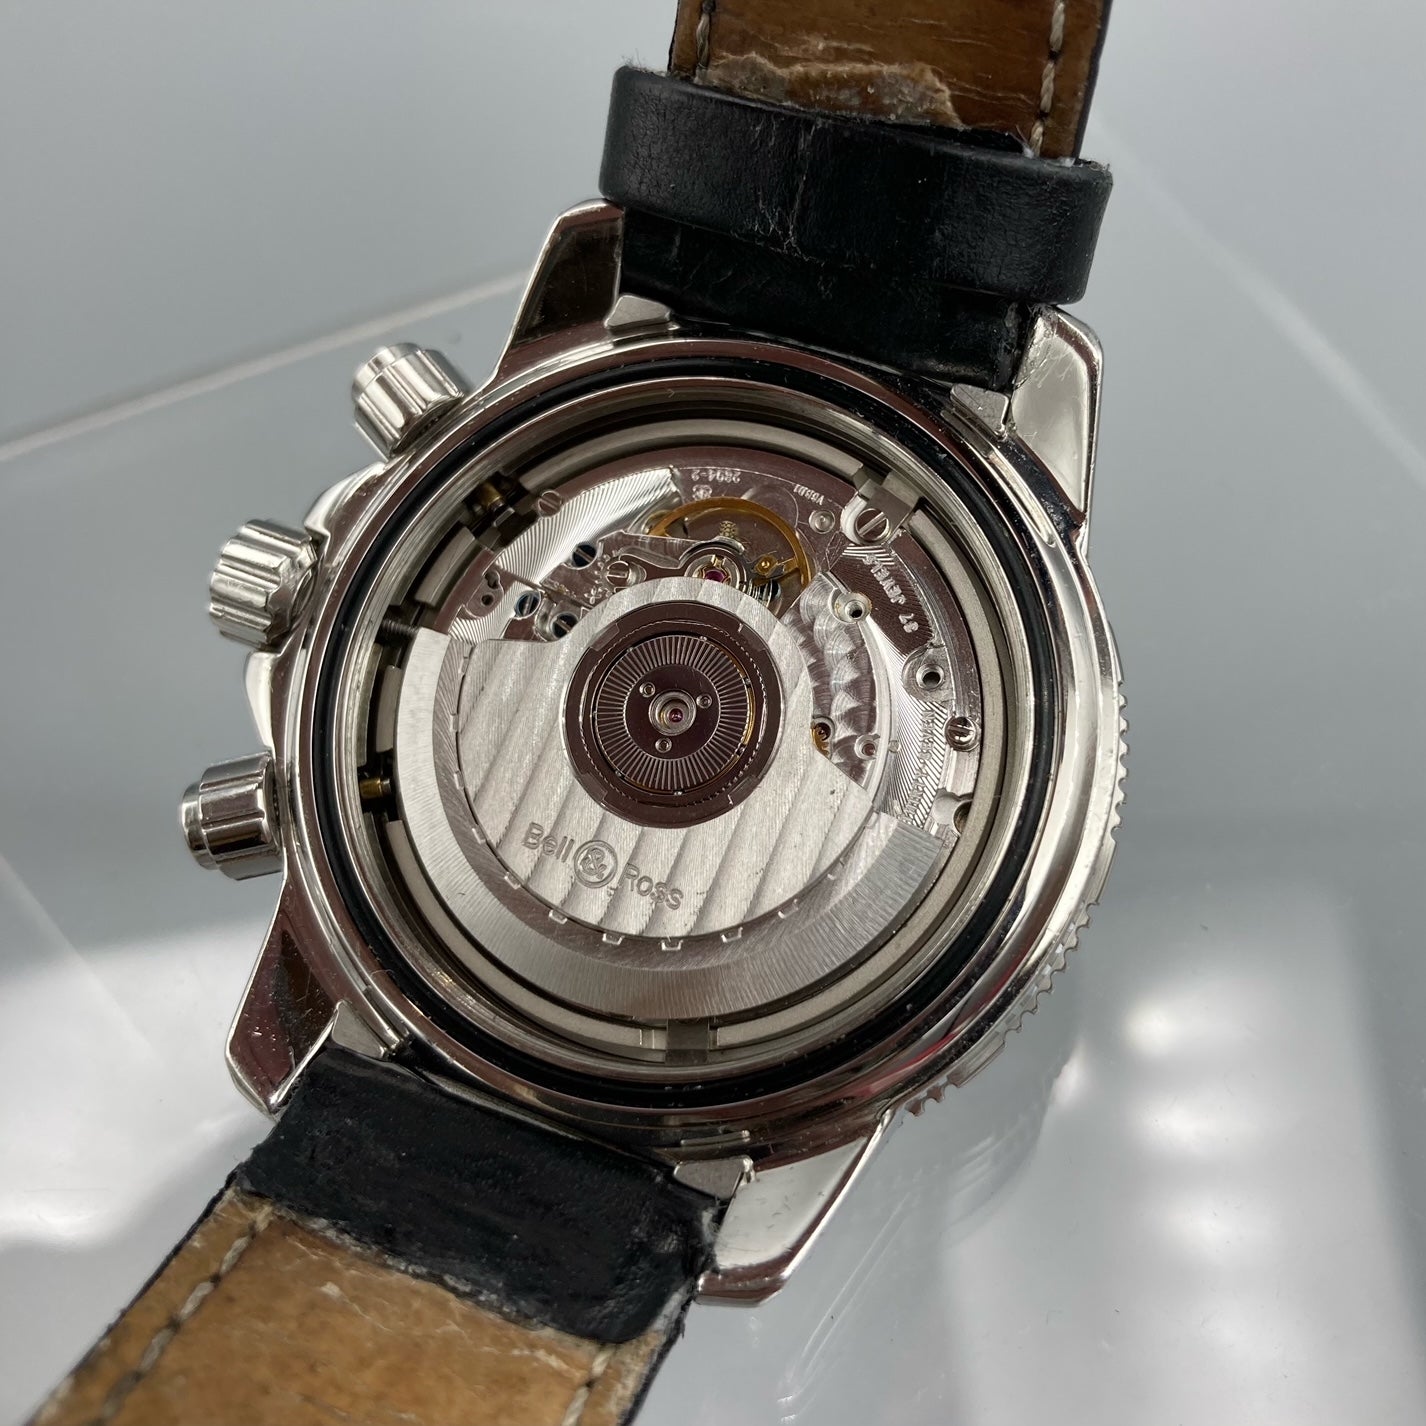 Montre Bell & Ross Chronographe Cadran Noir 500S - Diver 300